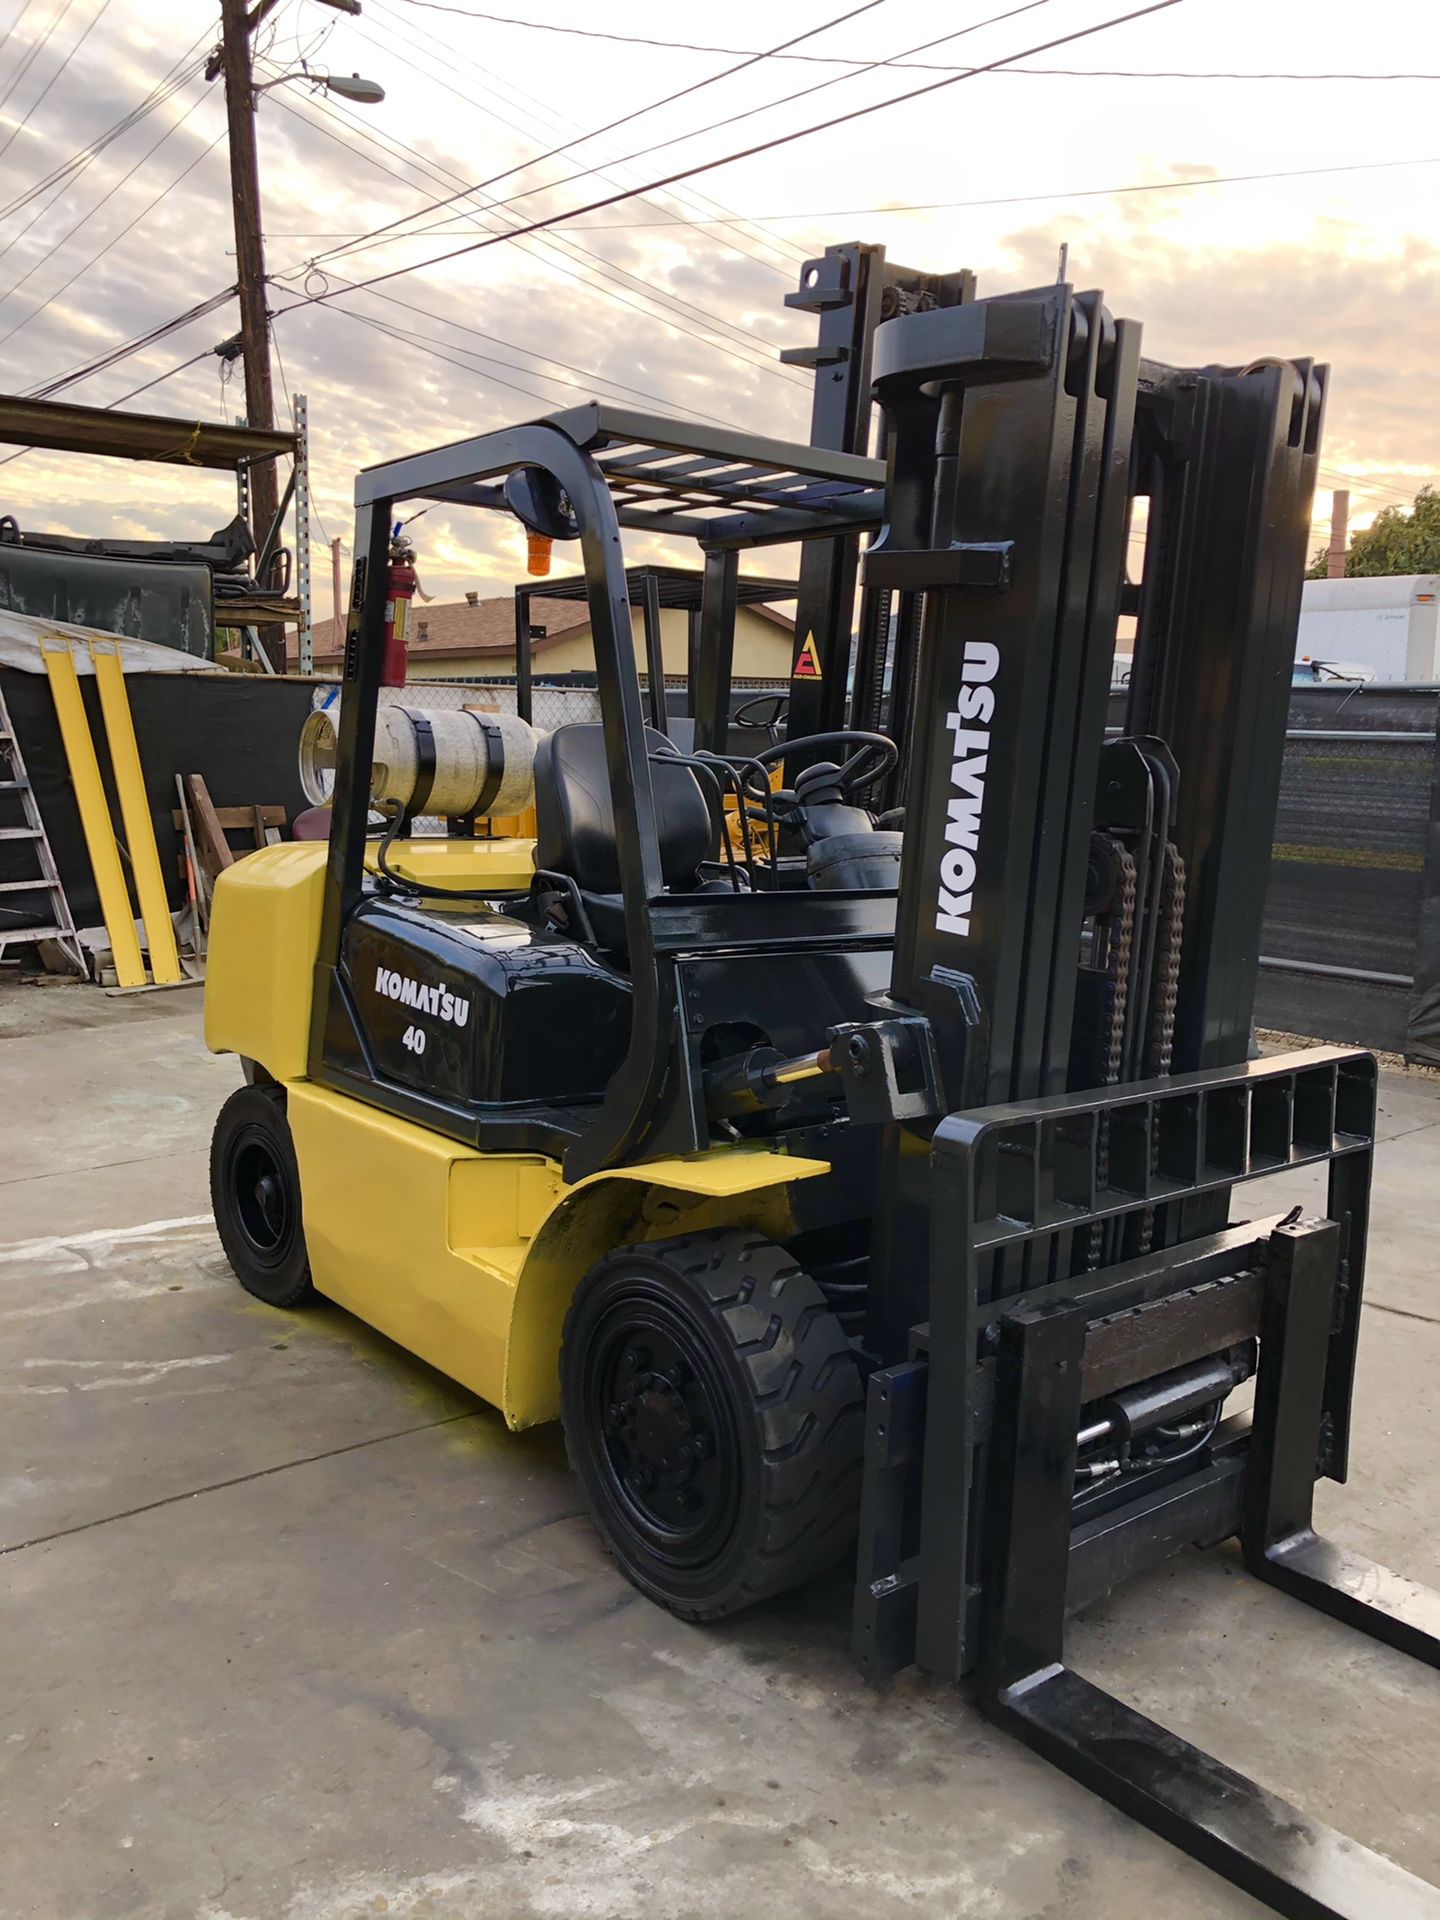 Komatsu Forklift 8000 pound capacity 3 stage with side shift